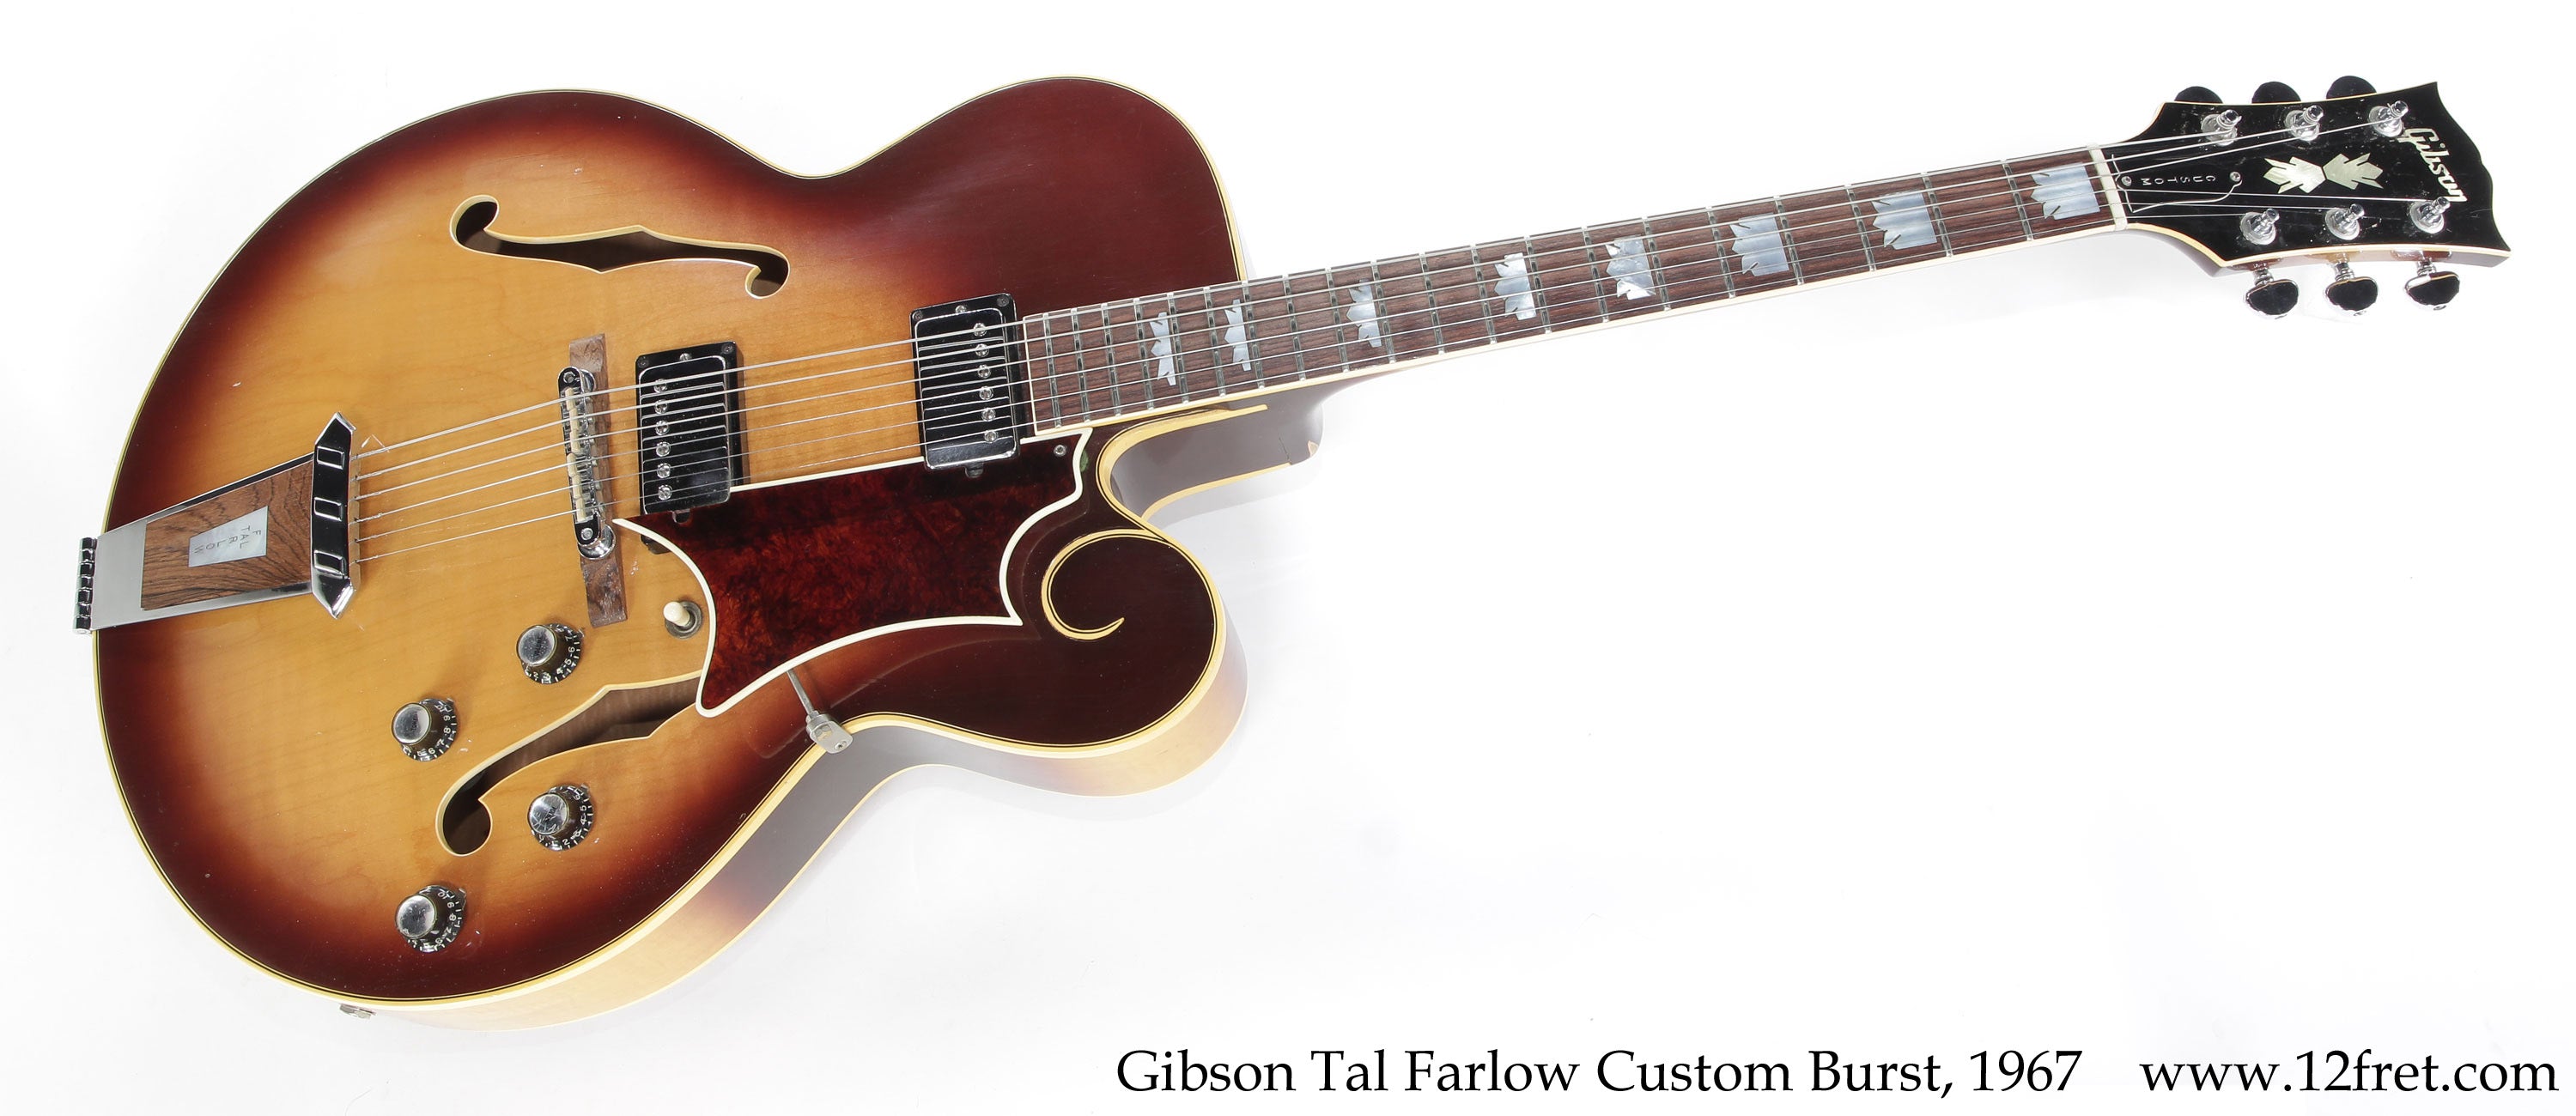 Gibson Tal Farlow, 1967 - The Twelfth Fret